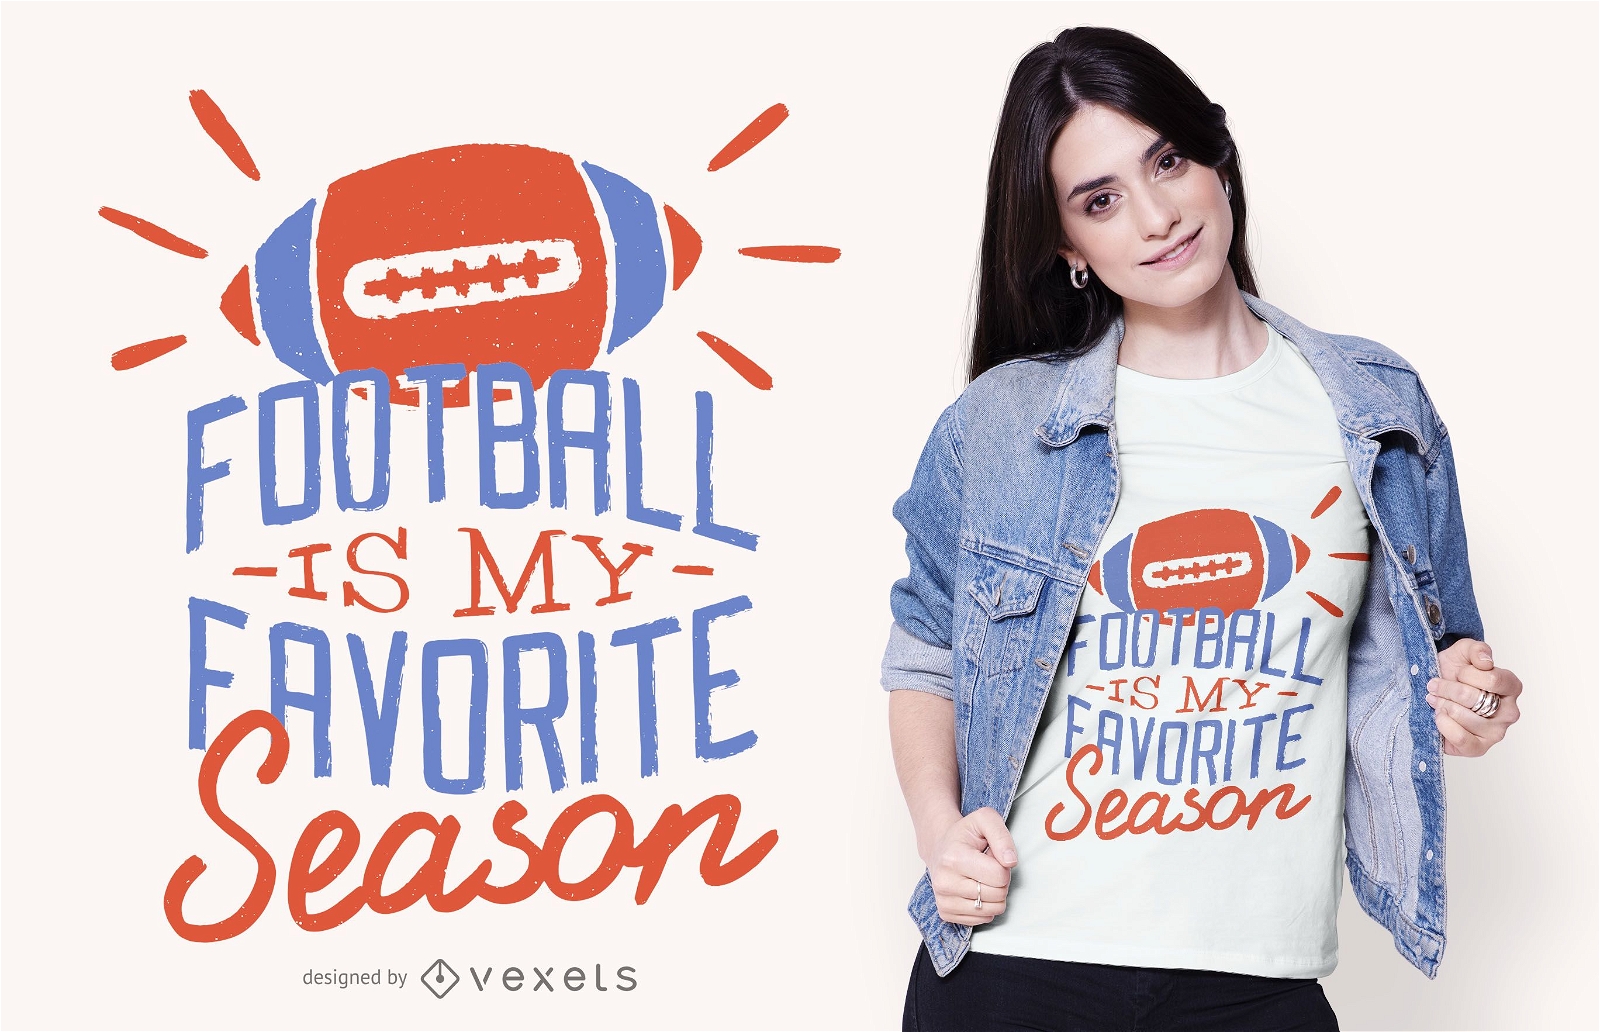 Football season t-shirt design